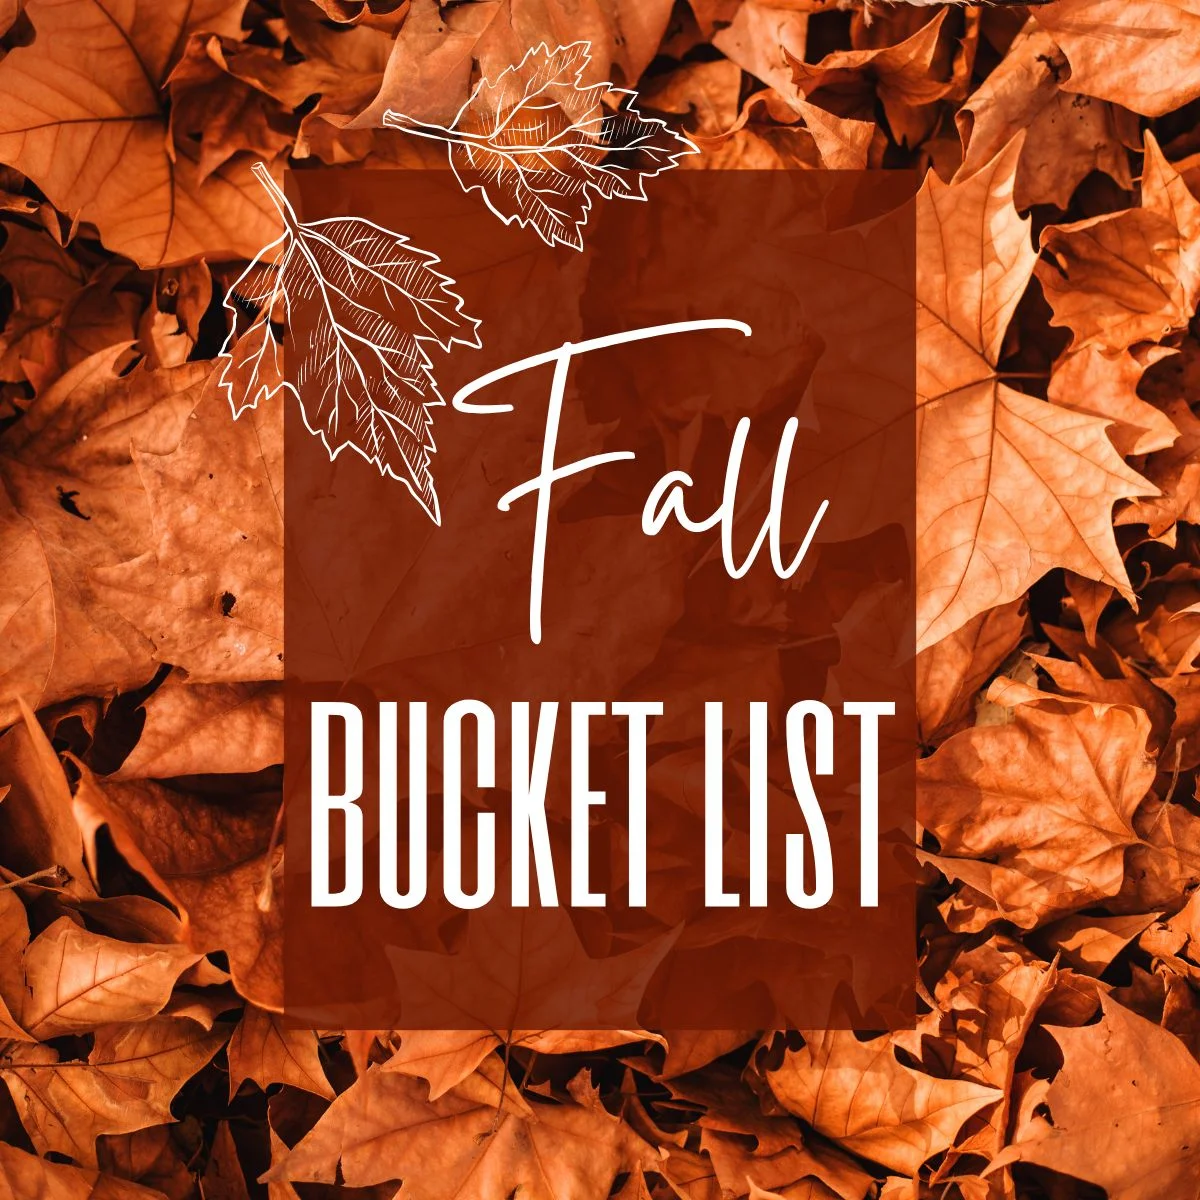 Fall Bucket List Ideas